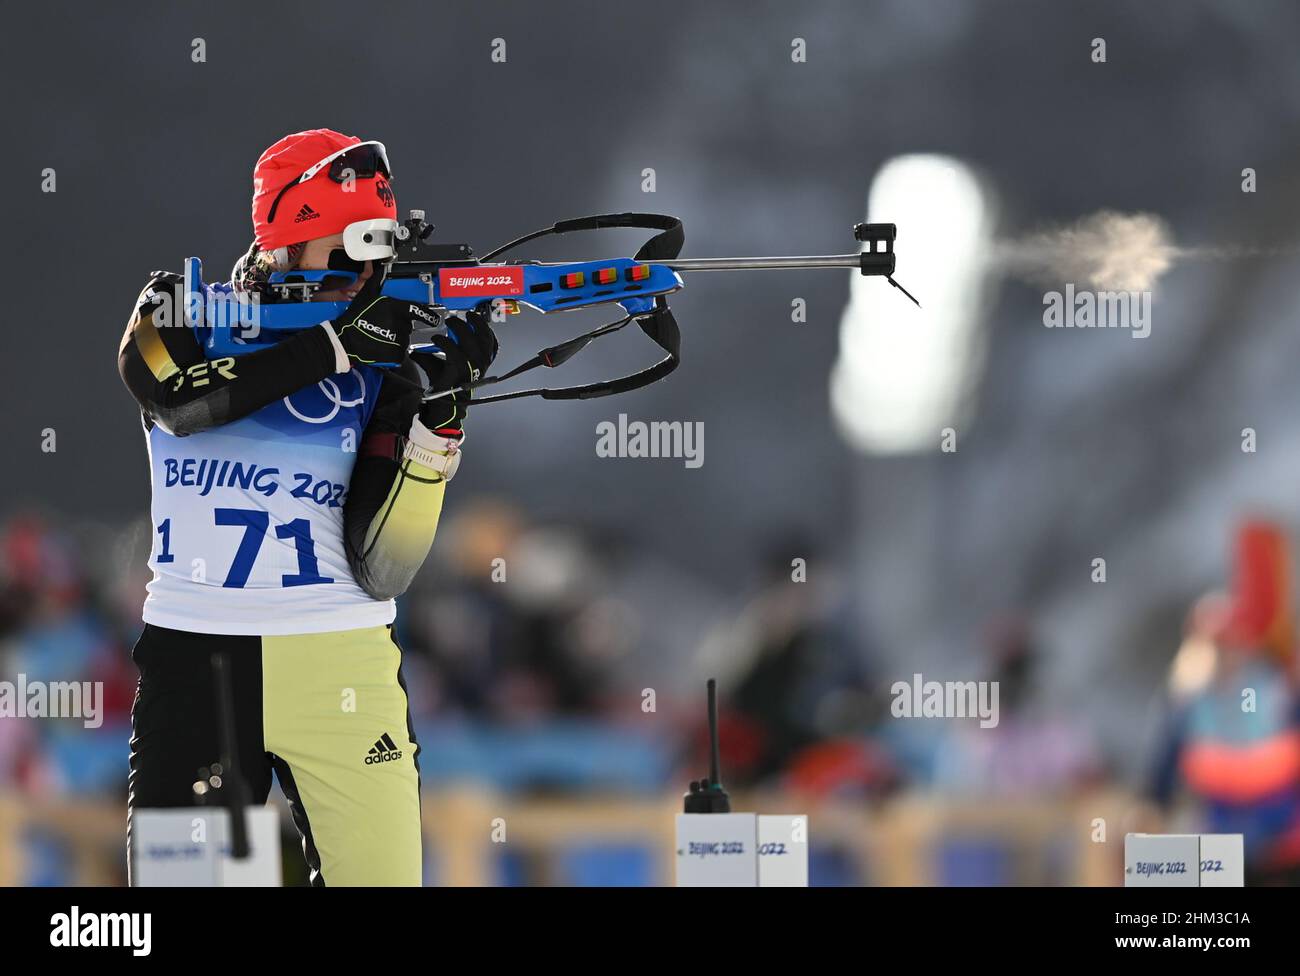 Zhangjiakou, China. 07th Feb, 2022. Biathlon, Olympics, individual 15 km, women at the National Biathlon Center